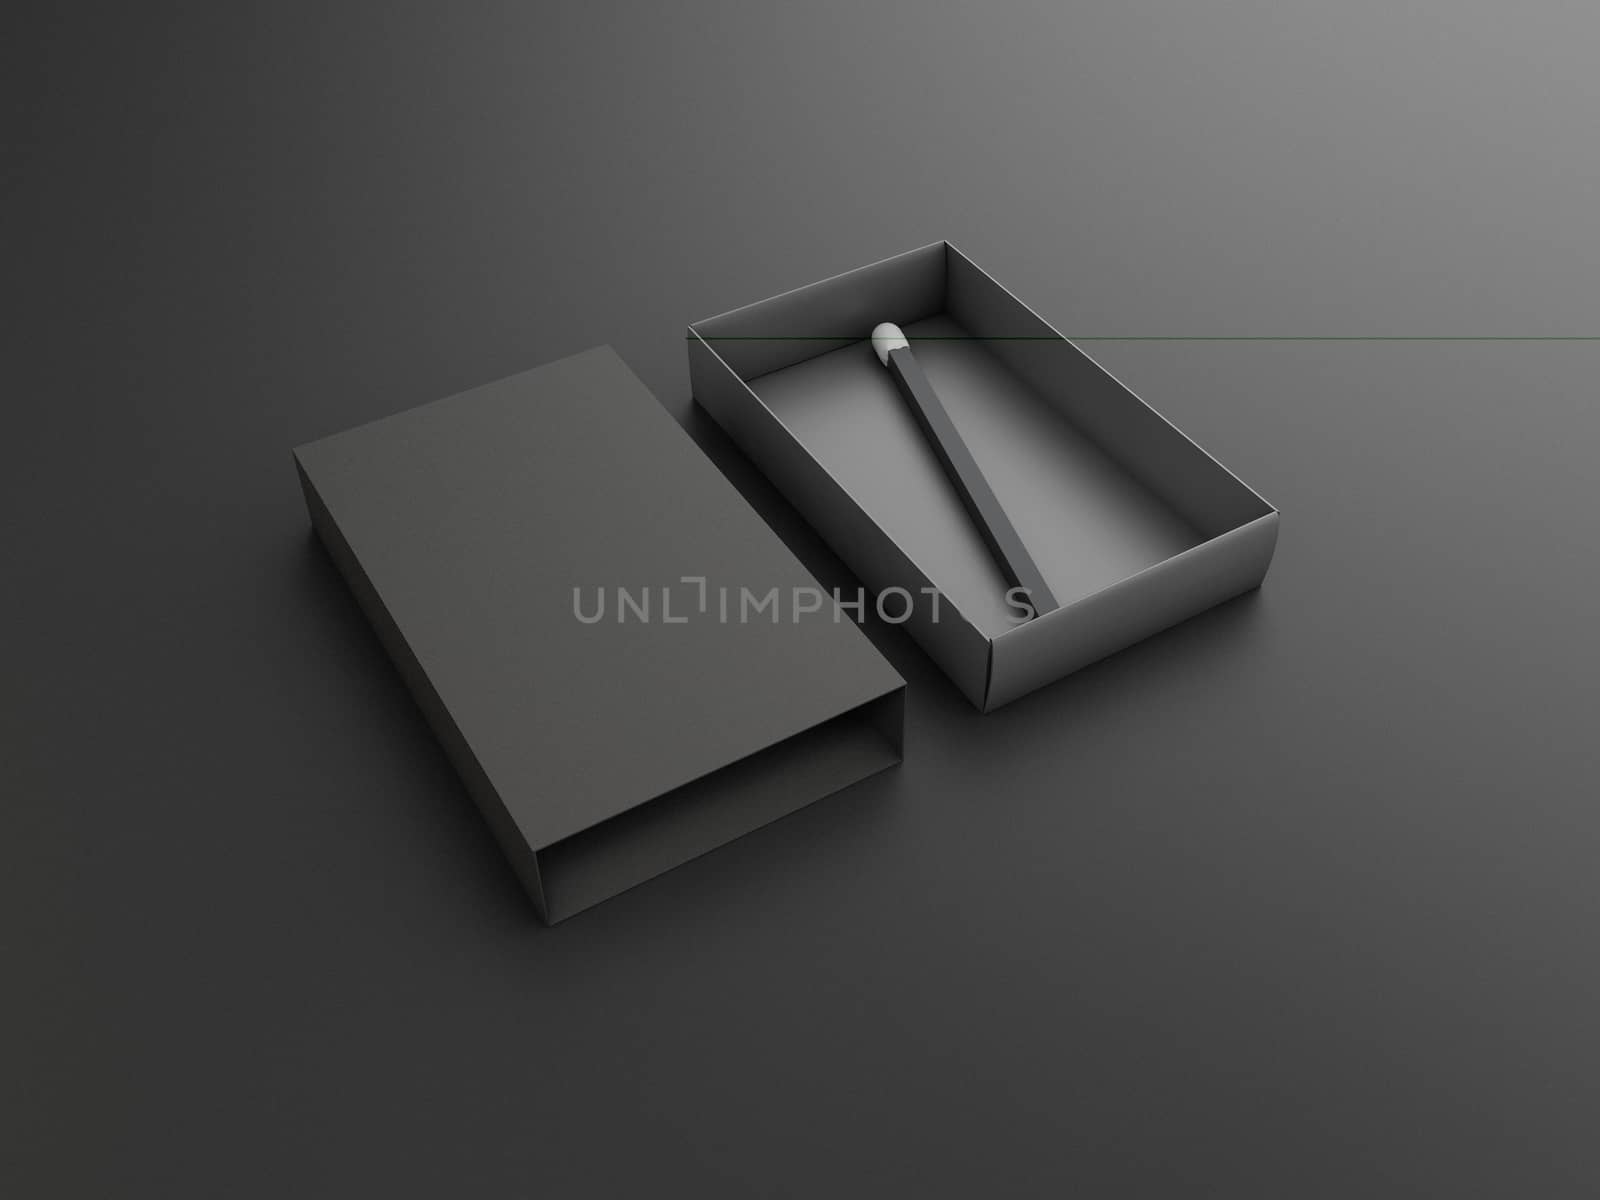 3d rendering of top view matchbox on dark background.